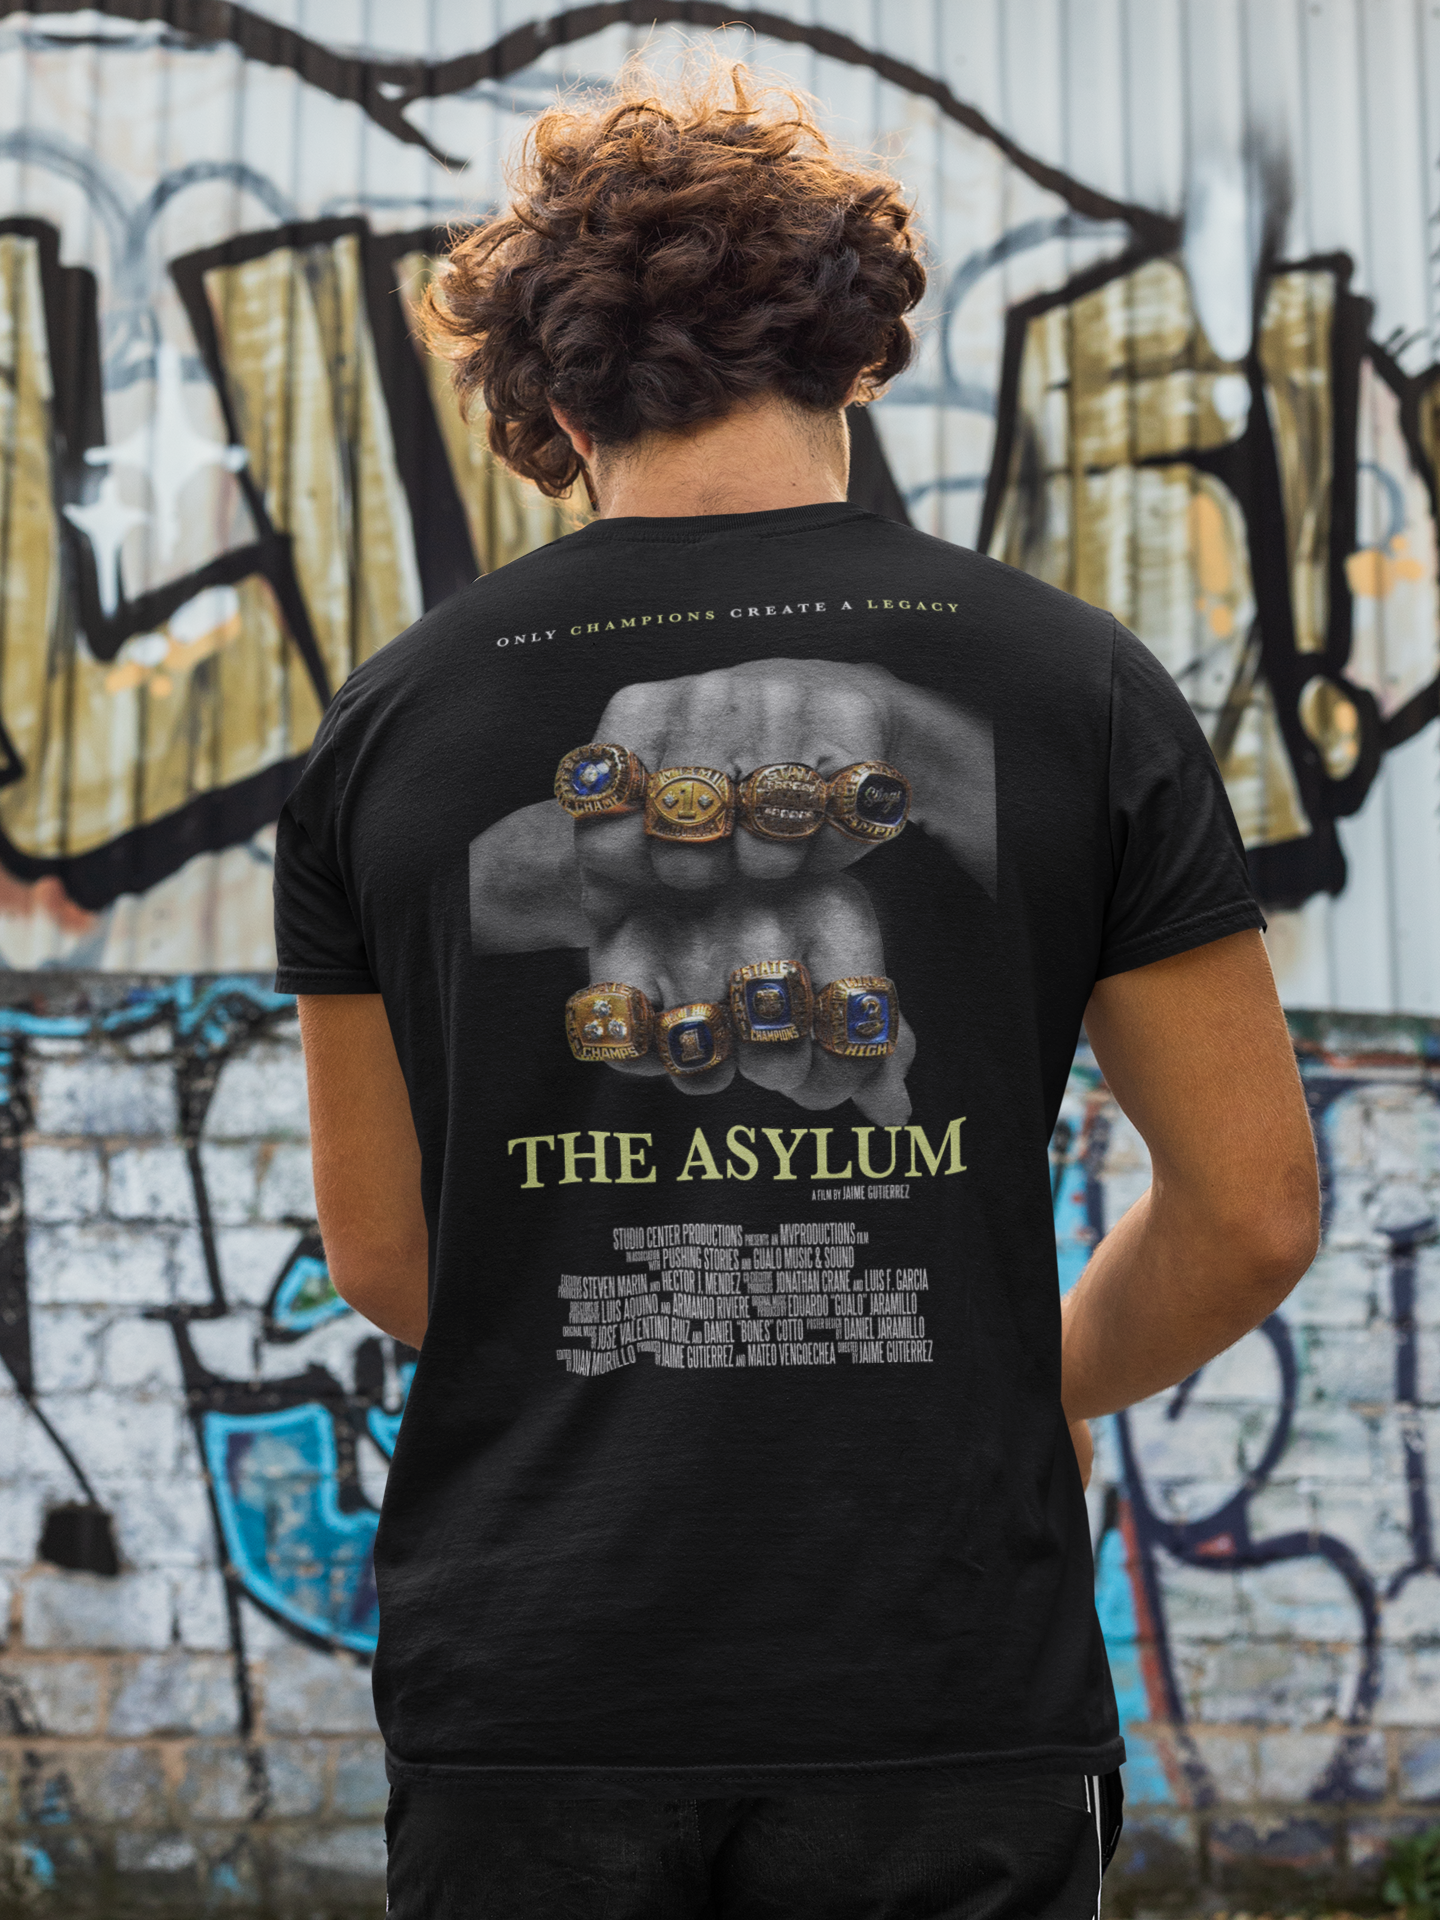 The Asylum tee